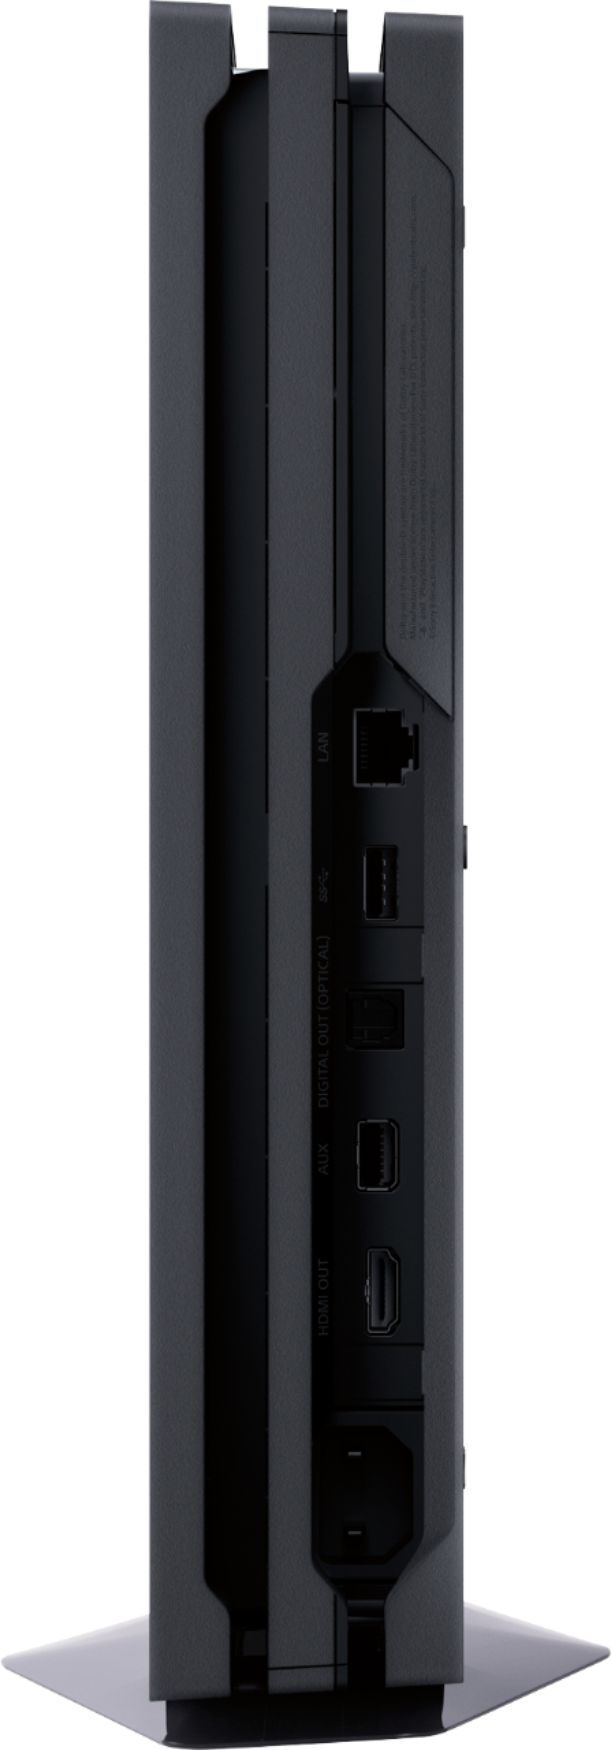 Sony Geek Squad Certified Refurbished PlayStation 4 500GB Console Black  GSRF 10034 - Best Buy